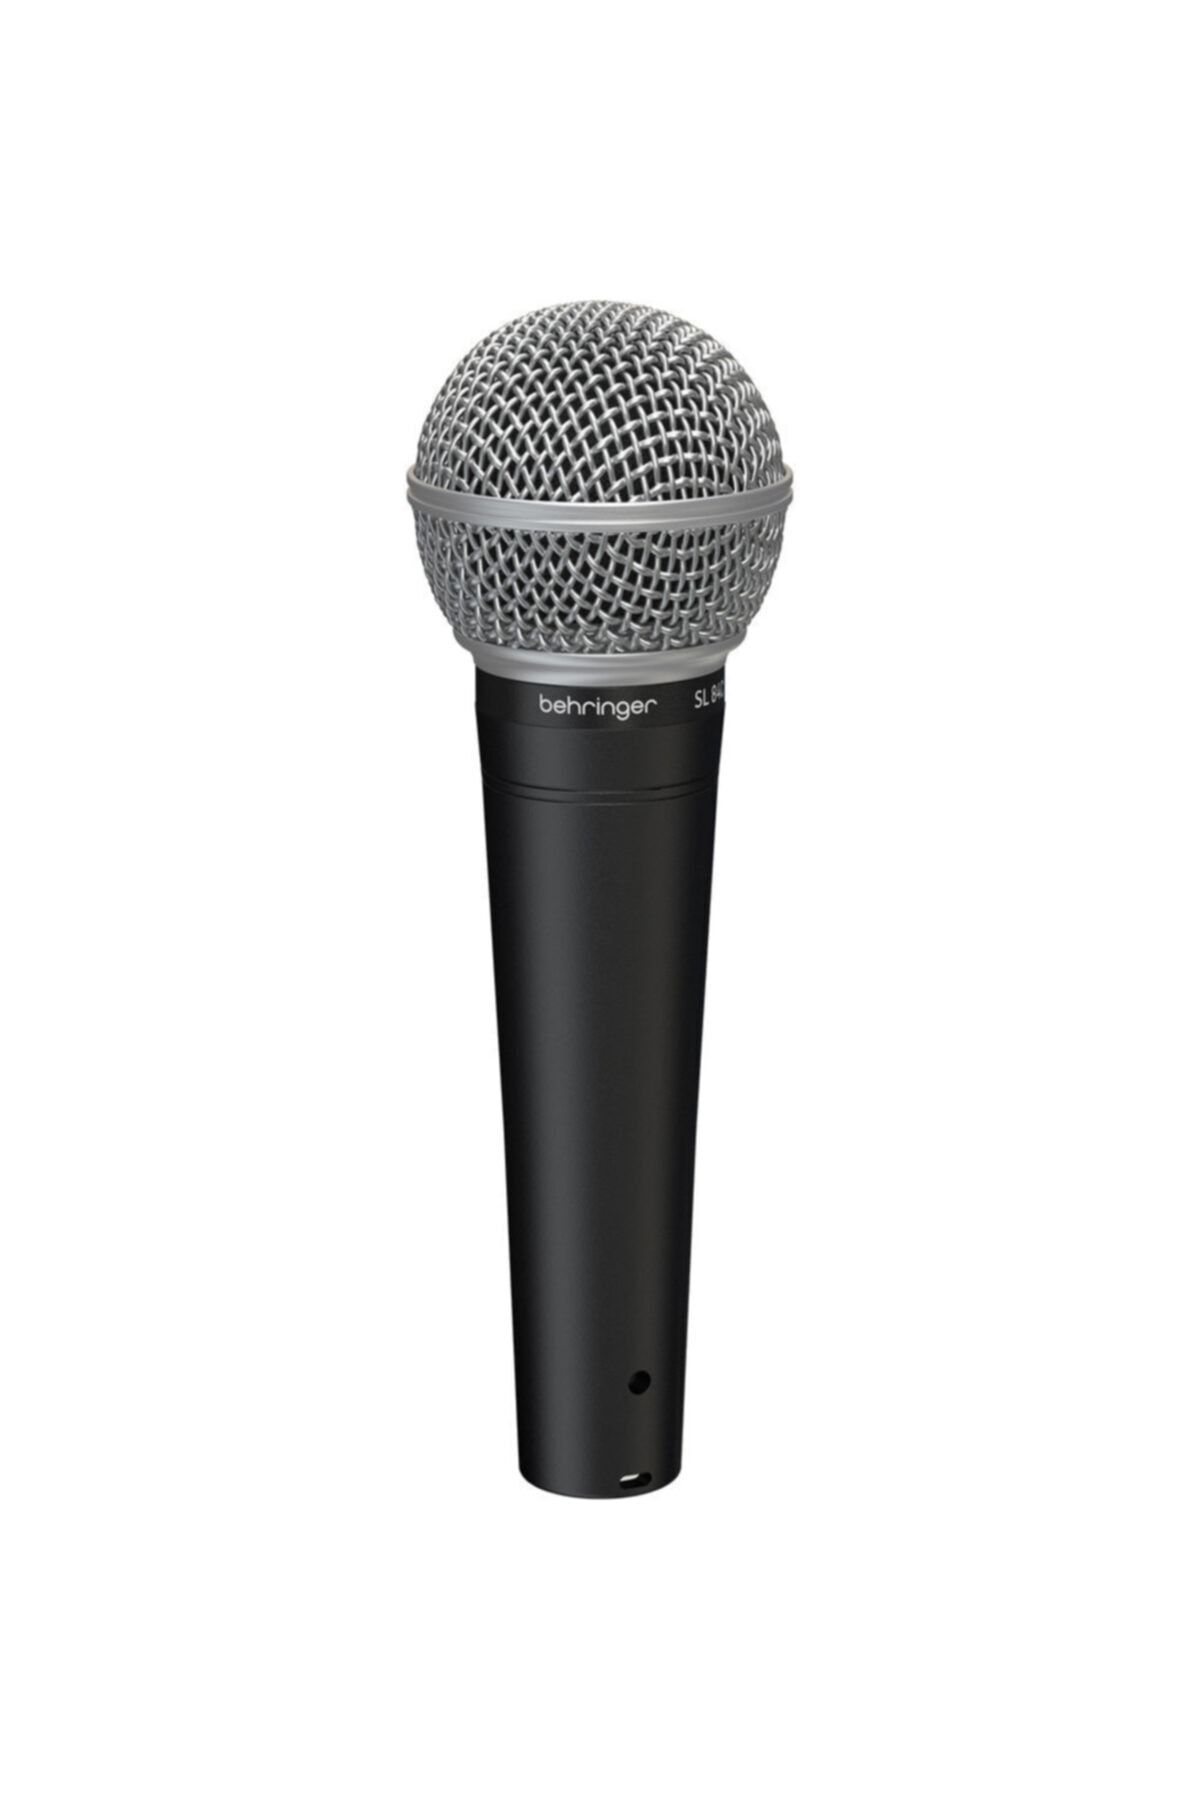 Behringer Sl84c Dynamic Cardioid Microphone